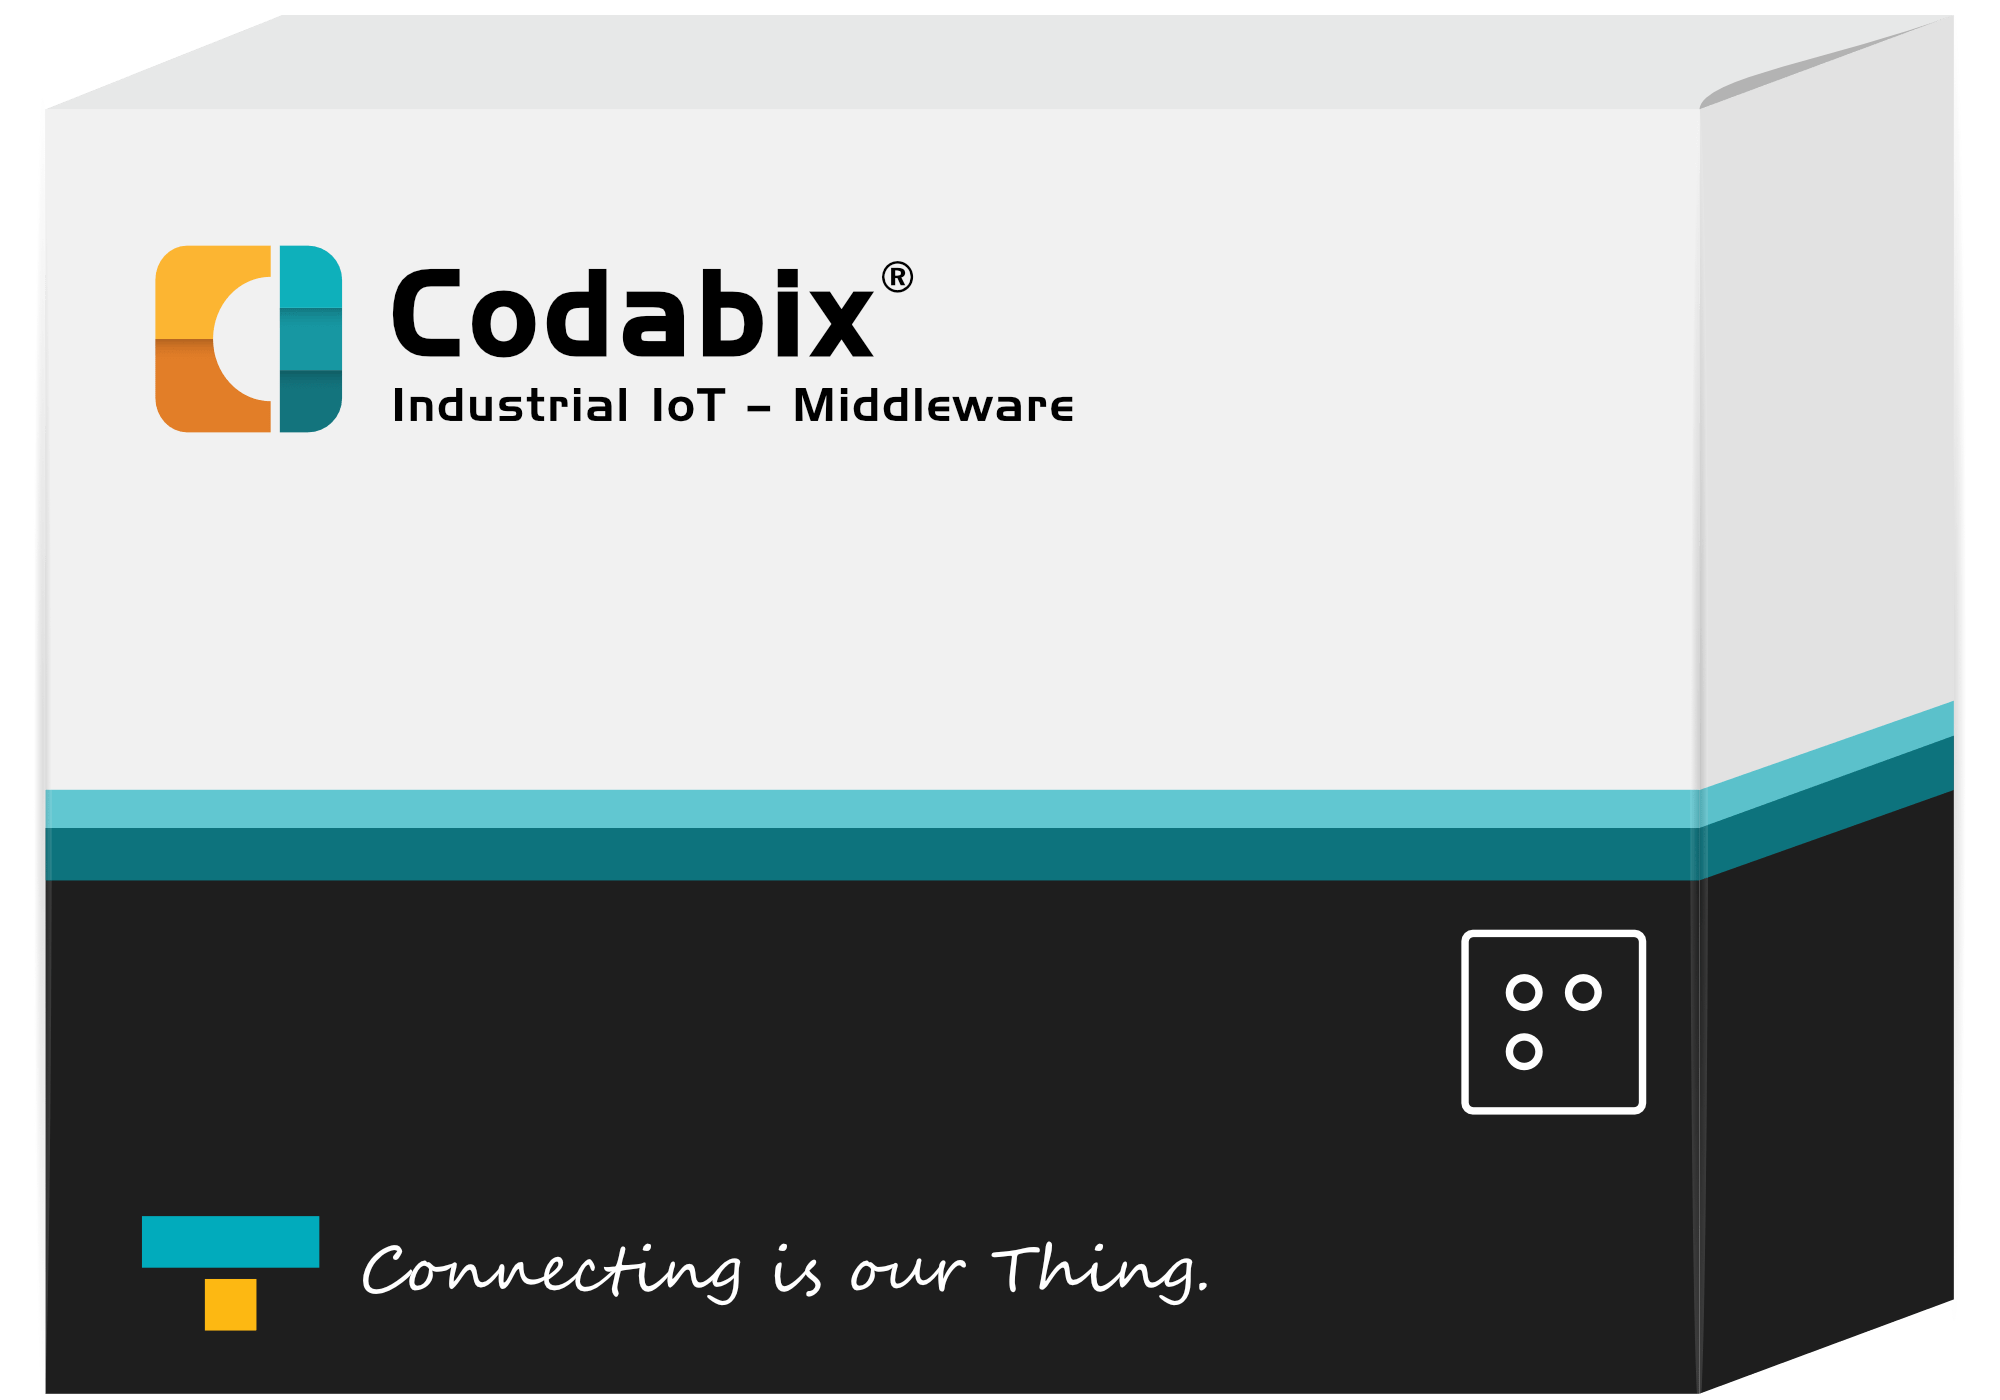 Codabix Industrial IoT product image